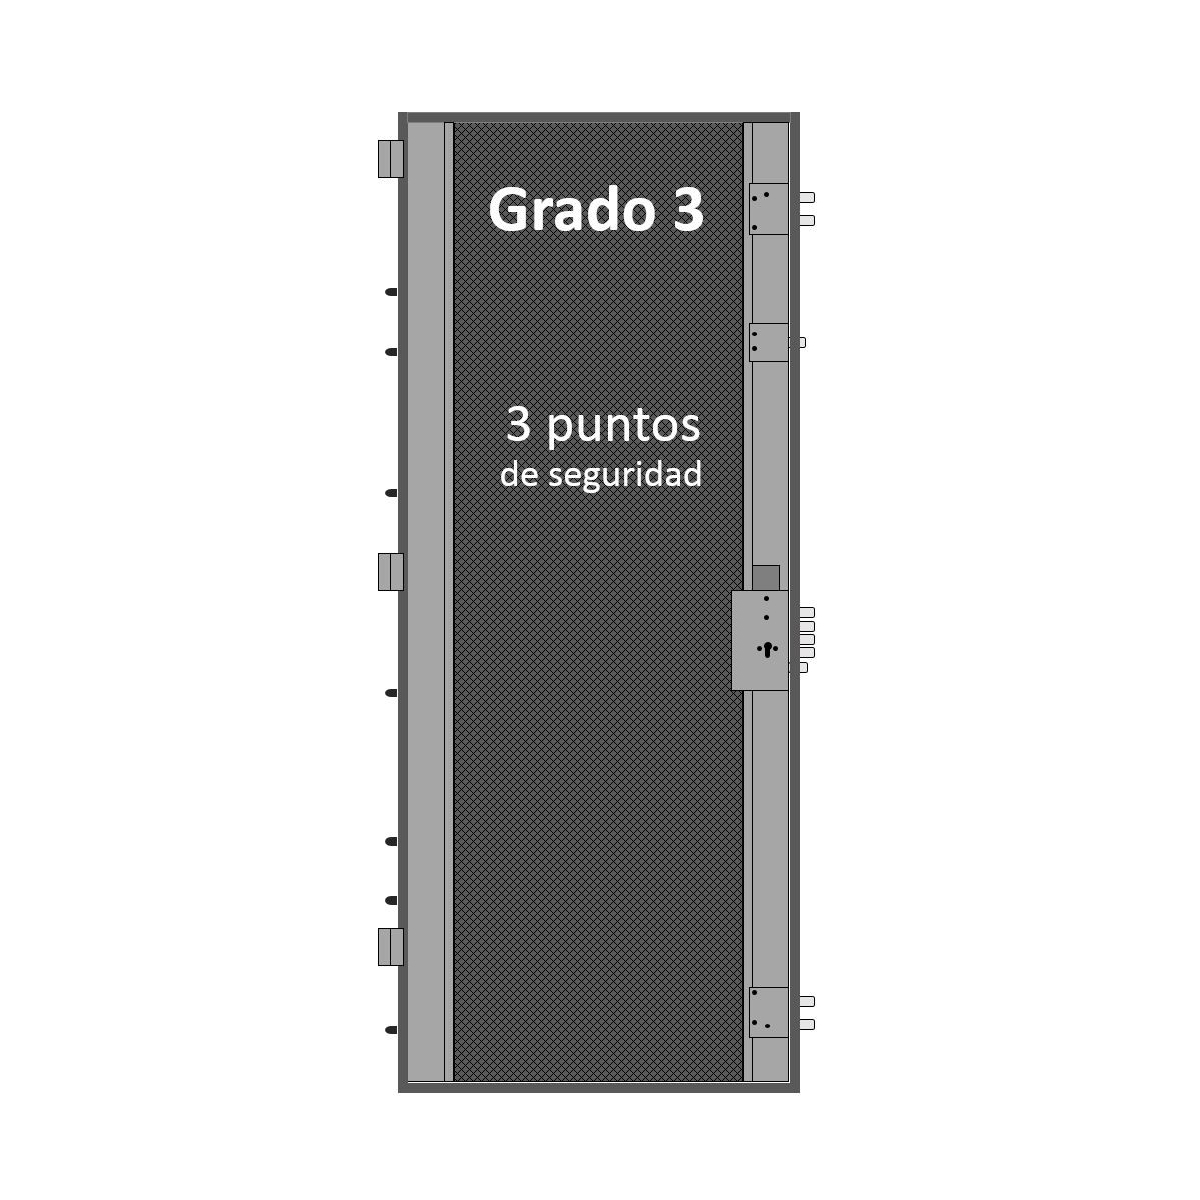 Puertas acorazadas Serie Omega Cearco - Puerta Acorazada 100cm grado 3 Triana Omega